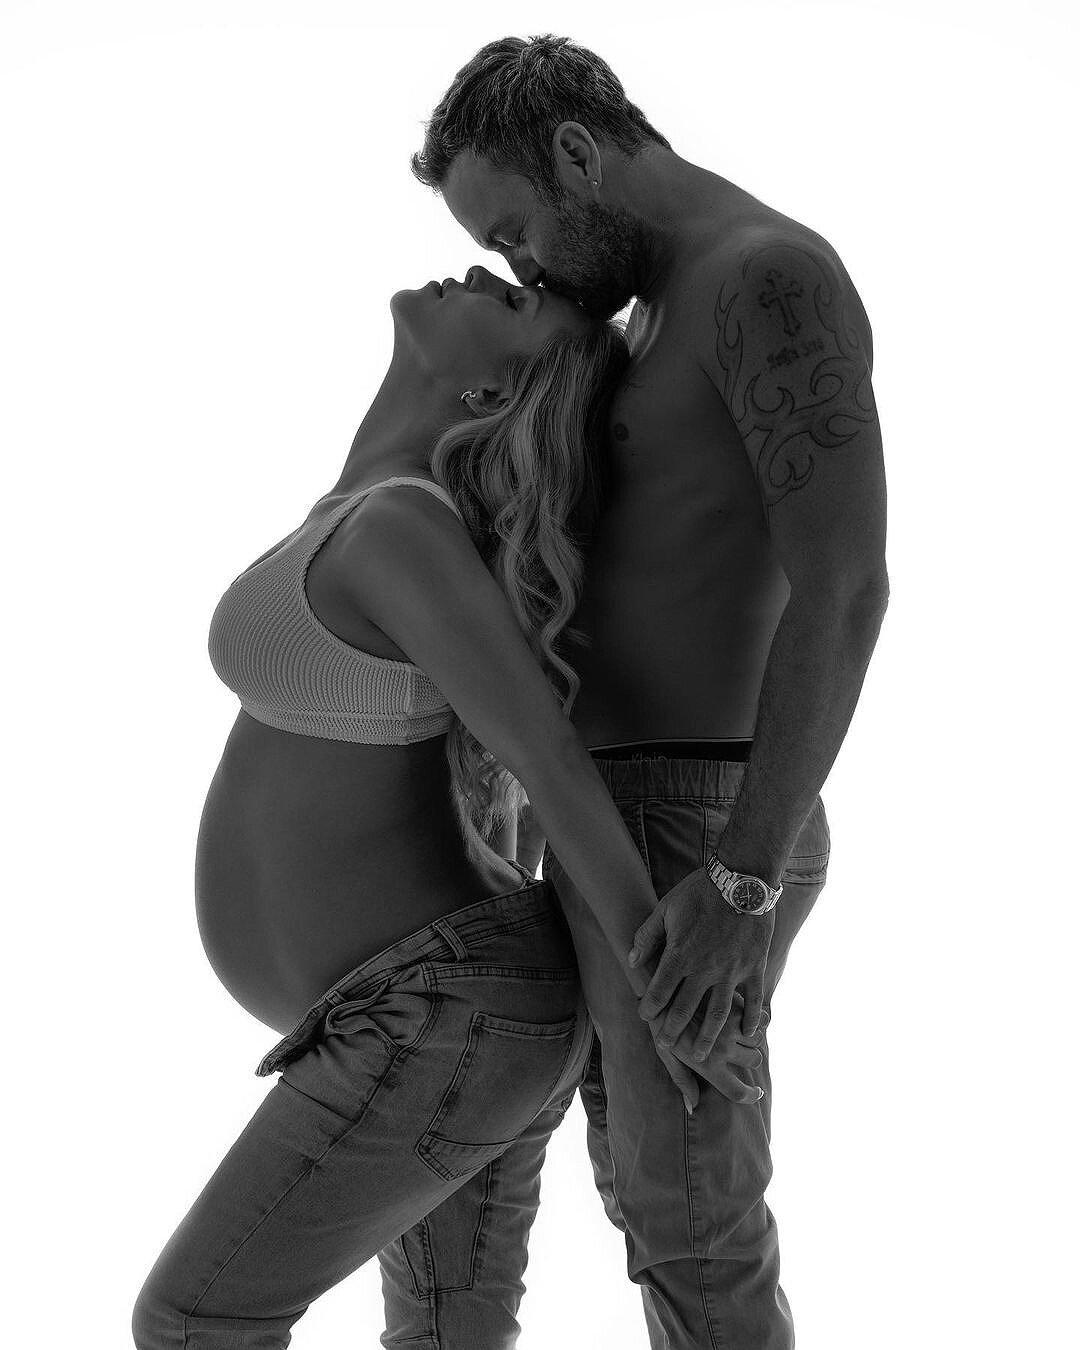 Sharna Burgess Shares Maternity Shoot, Celebrates 35 Weeks Pregnant: 'I Can't Wait'